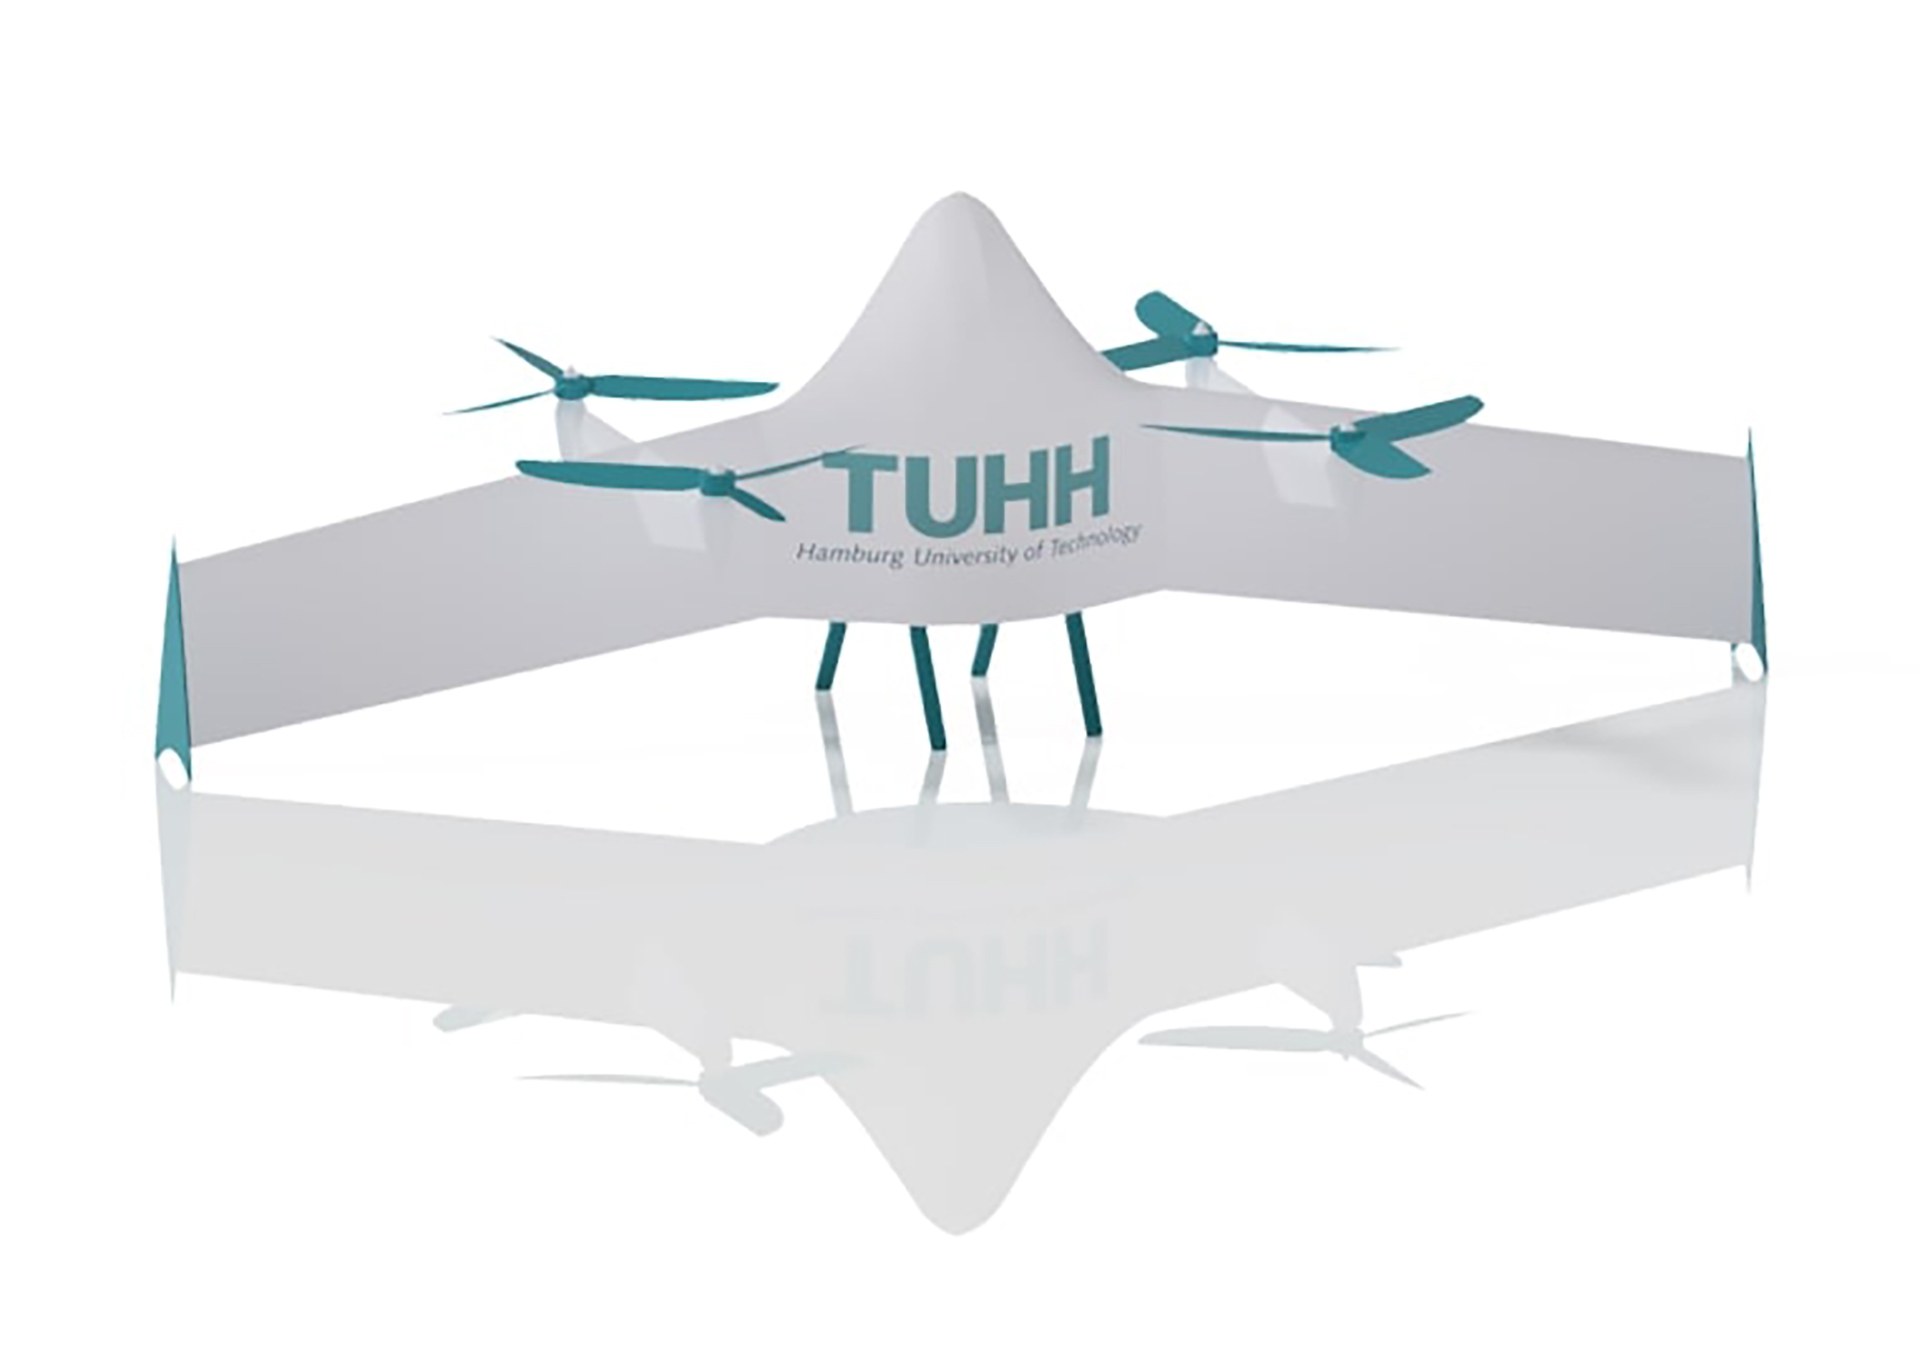 TUHH HecTO-R aircraft: The concept of the TU Hamburg team